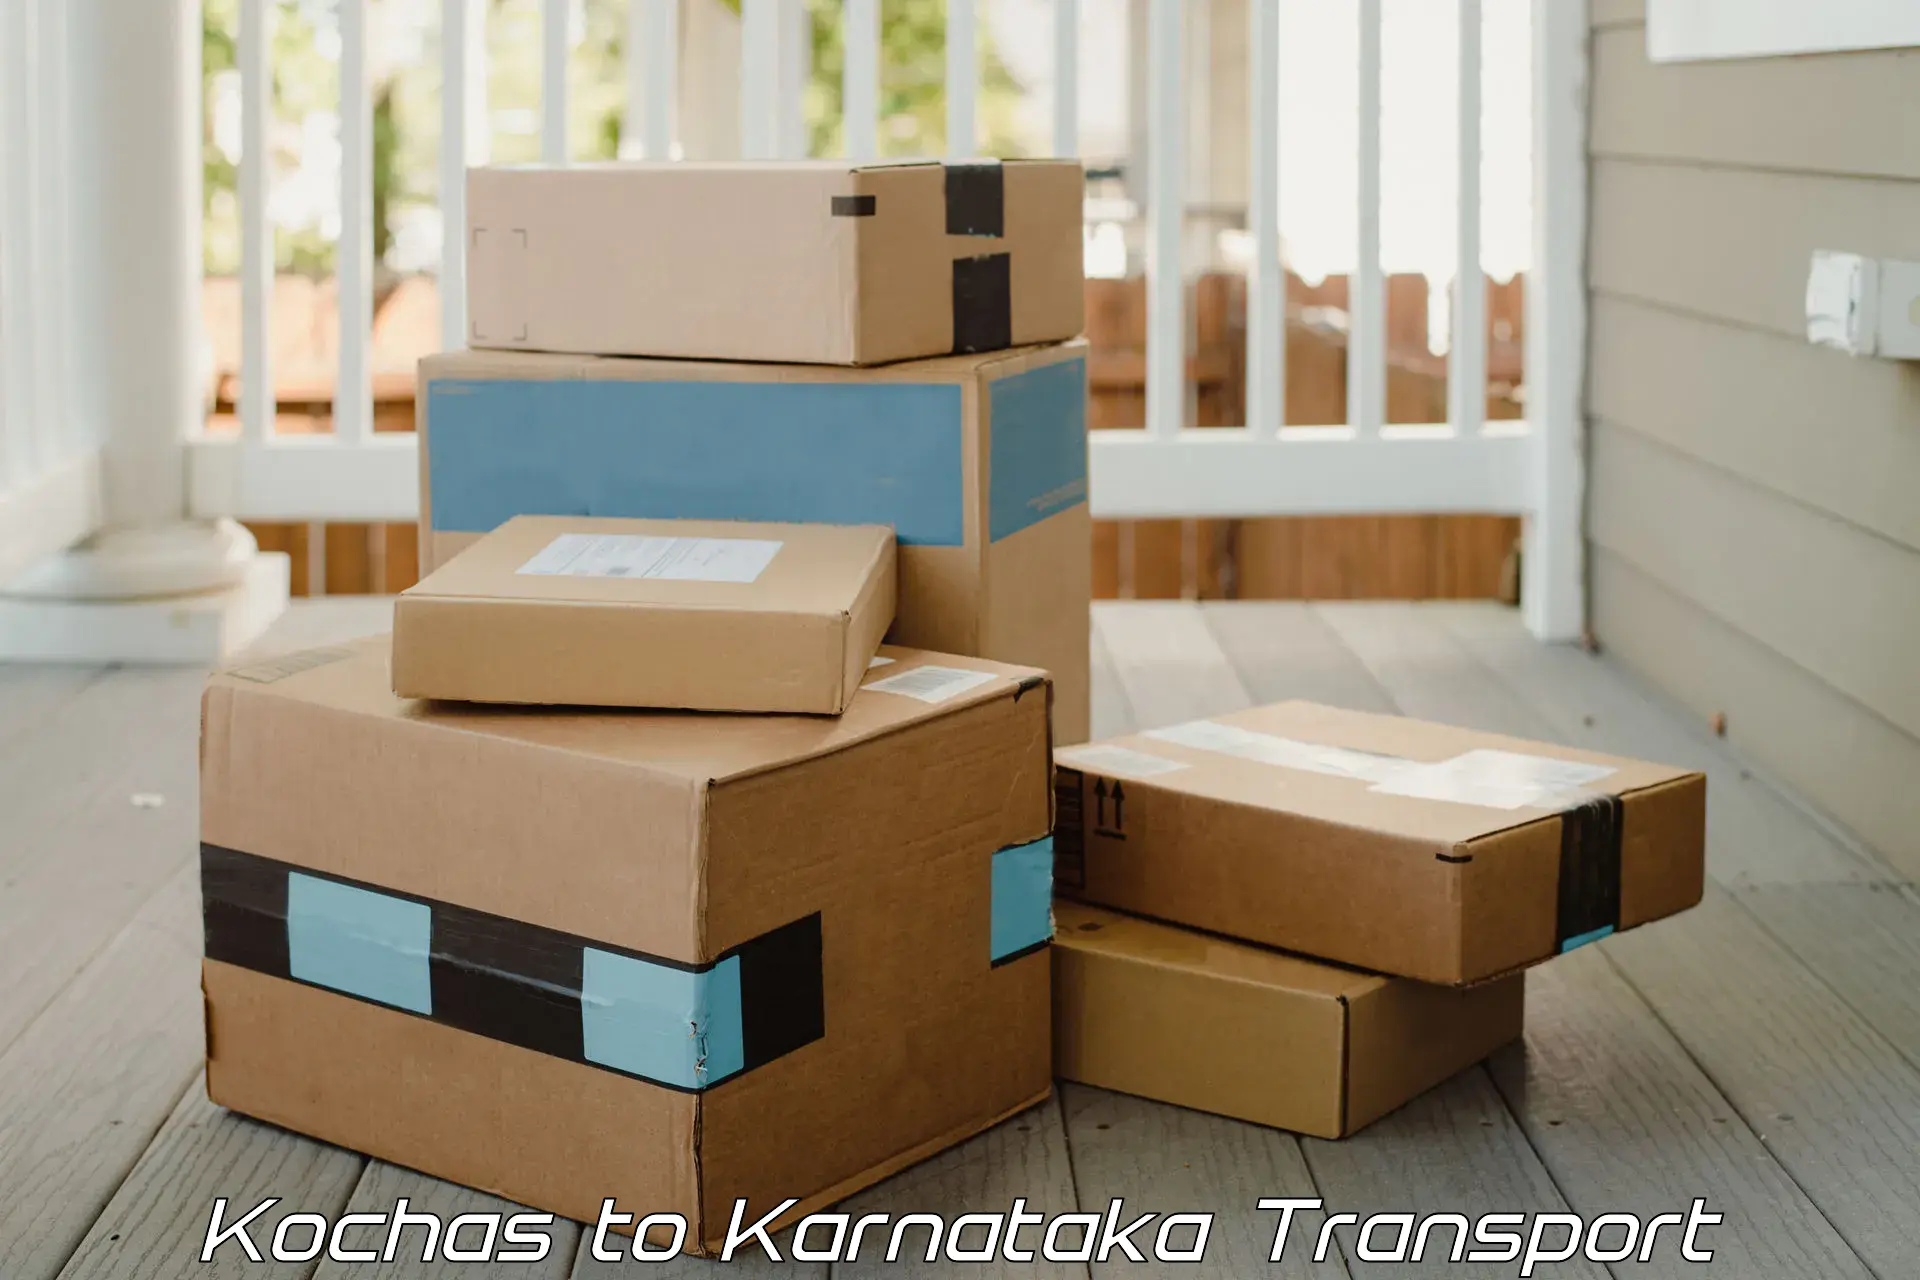 All India transport service Kochas to Karnataka